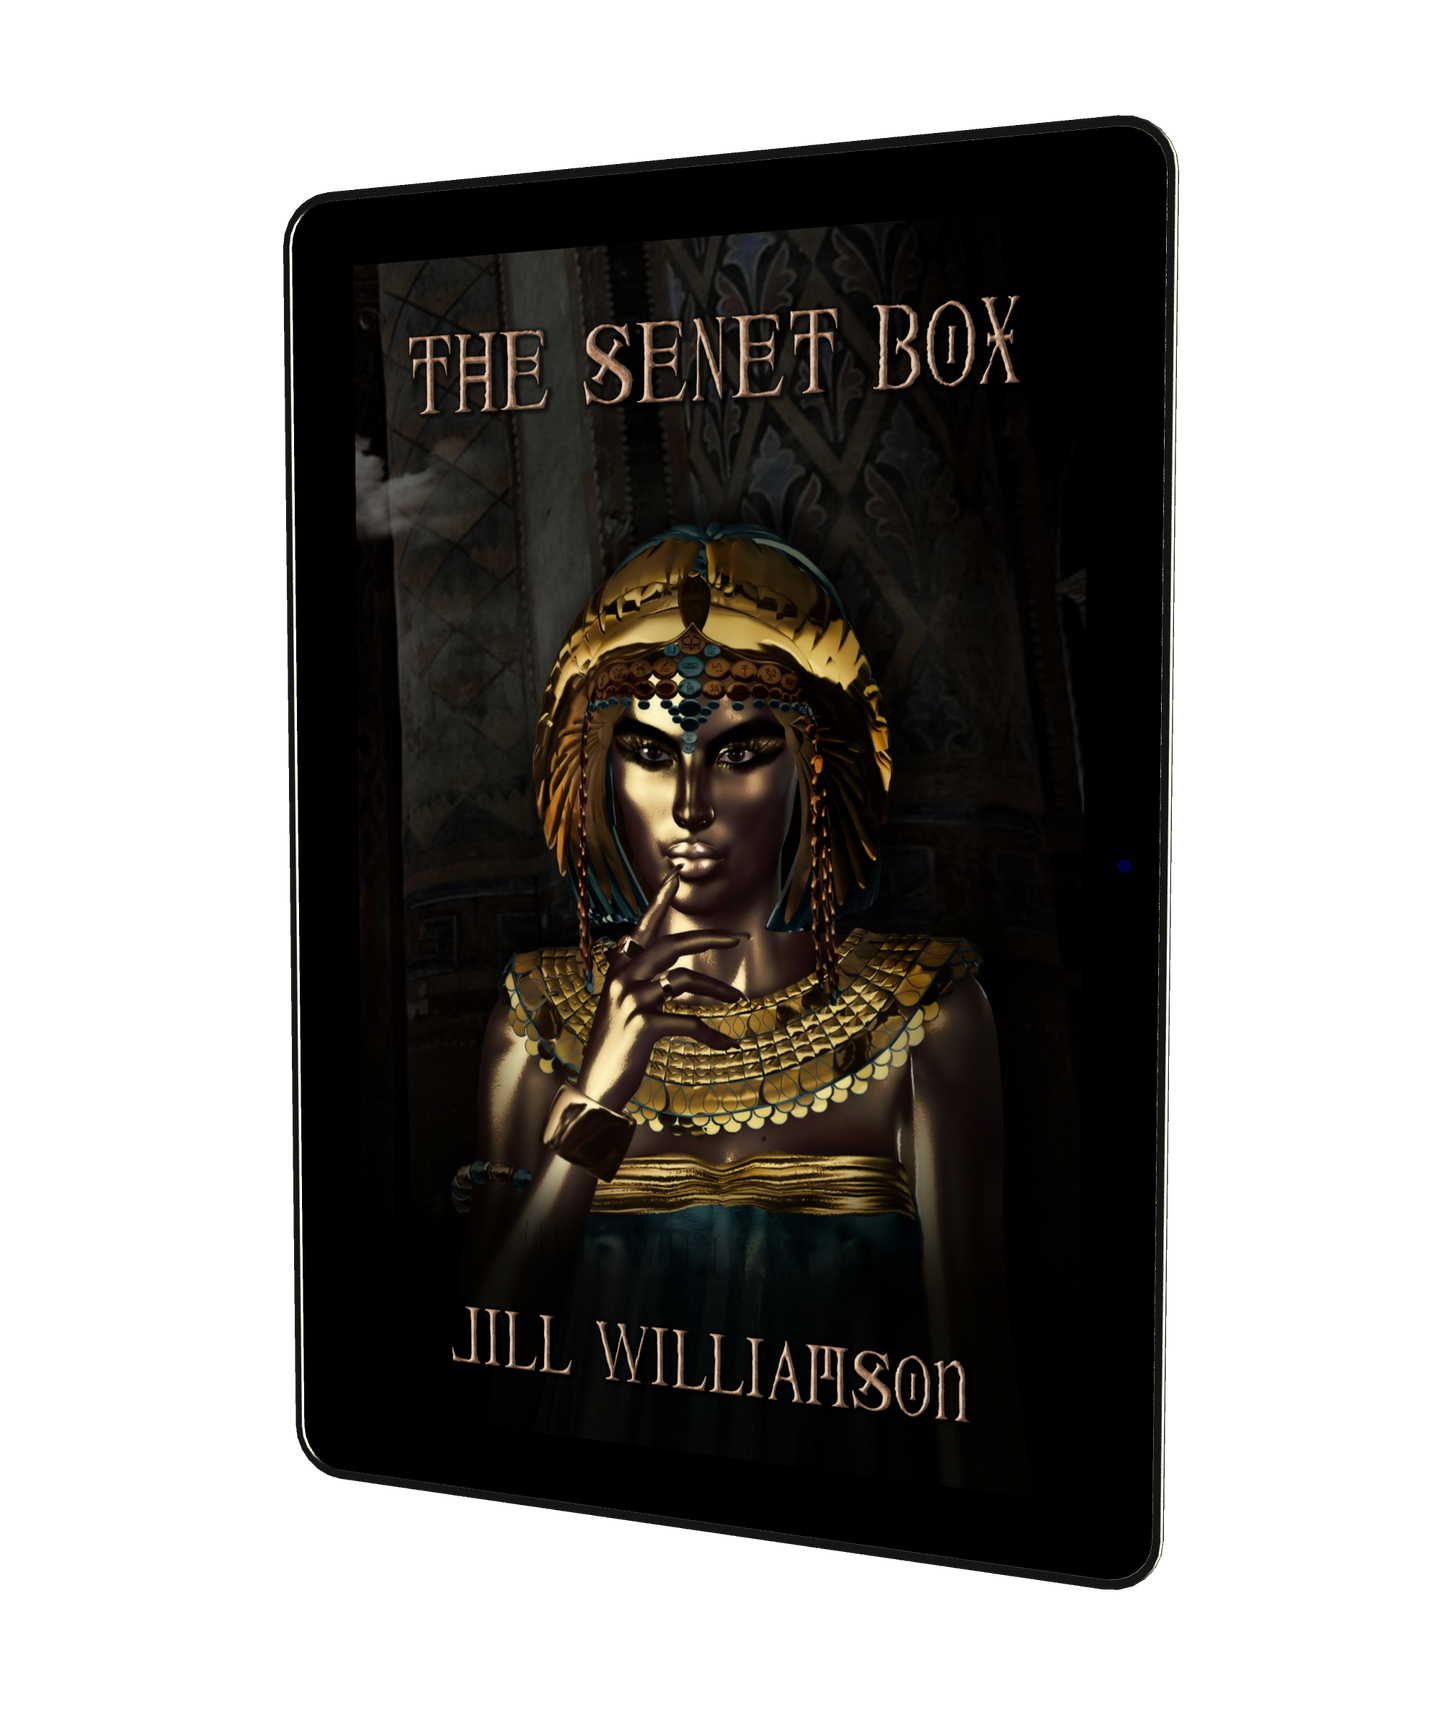 The Senet Box